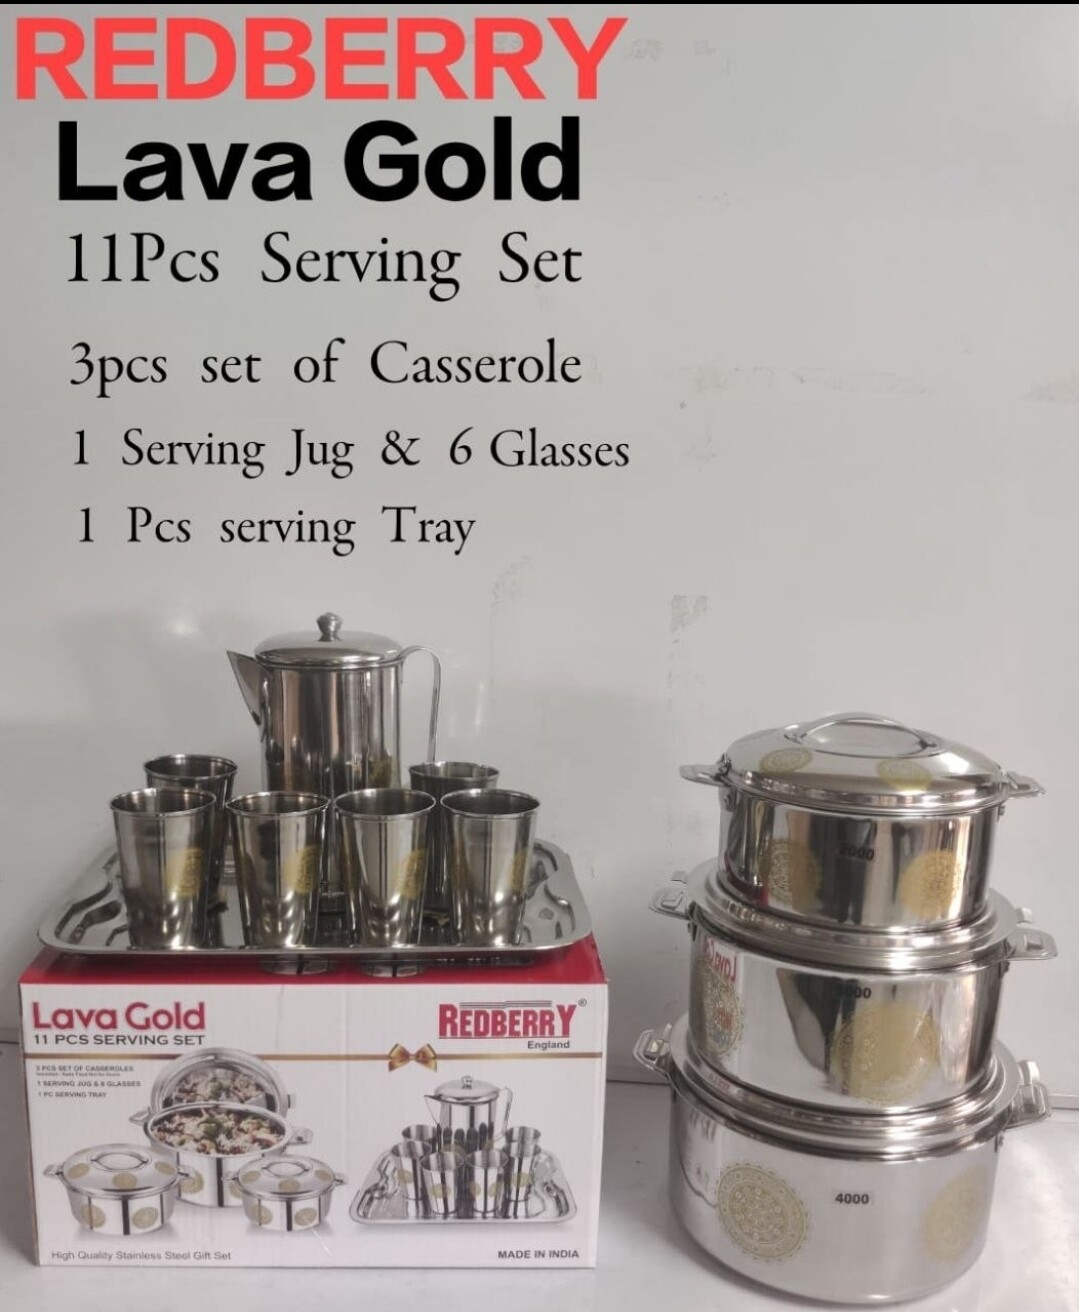 Stainless Steel serve ware 8pc water set and 3 pcs3L-4L hot pots 11pcs serving set Redberry Lava Gold